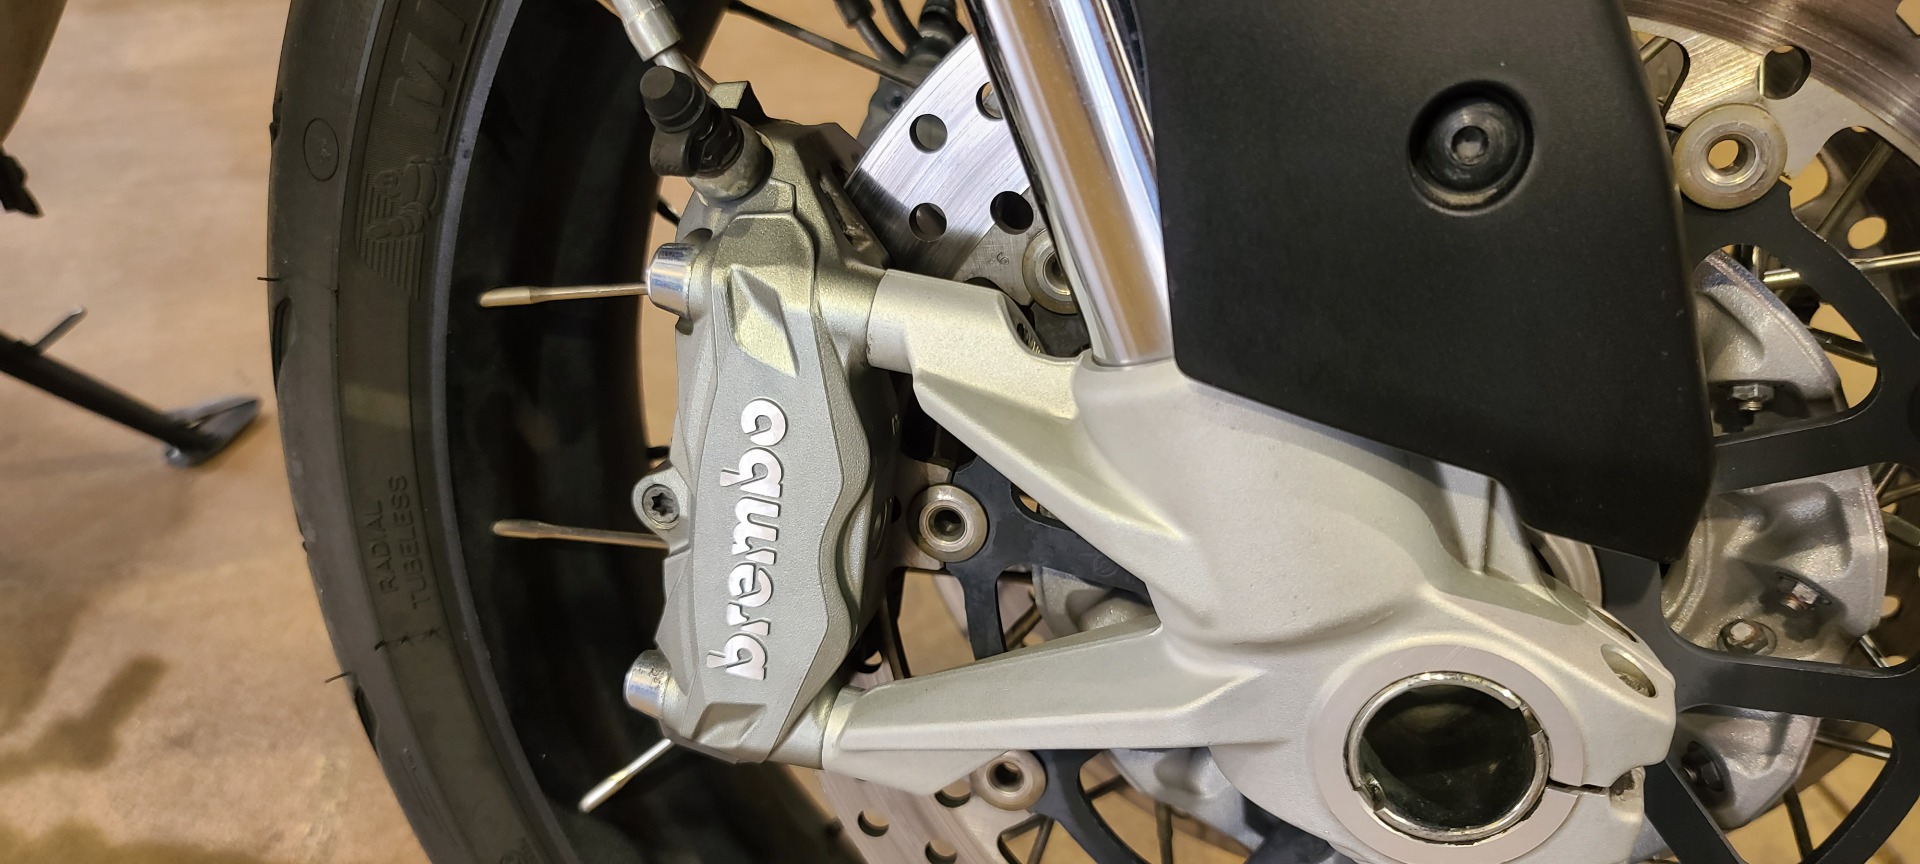 2017 Ducati Multistrada 1200 Enduro in Denver, Colorado - Photo 2